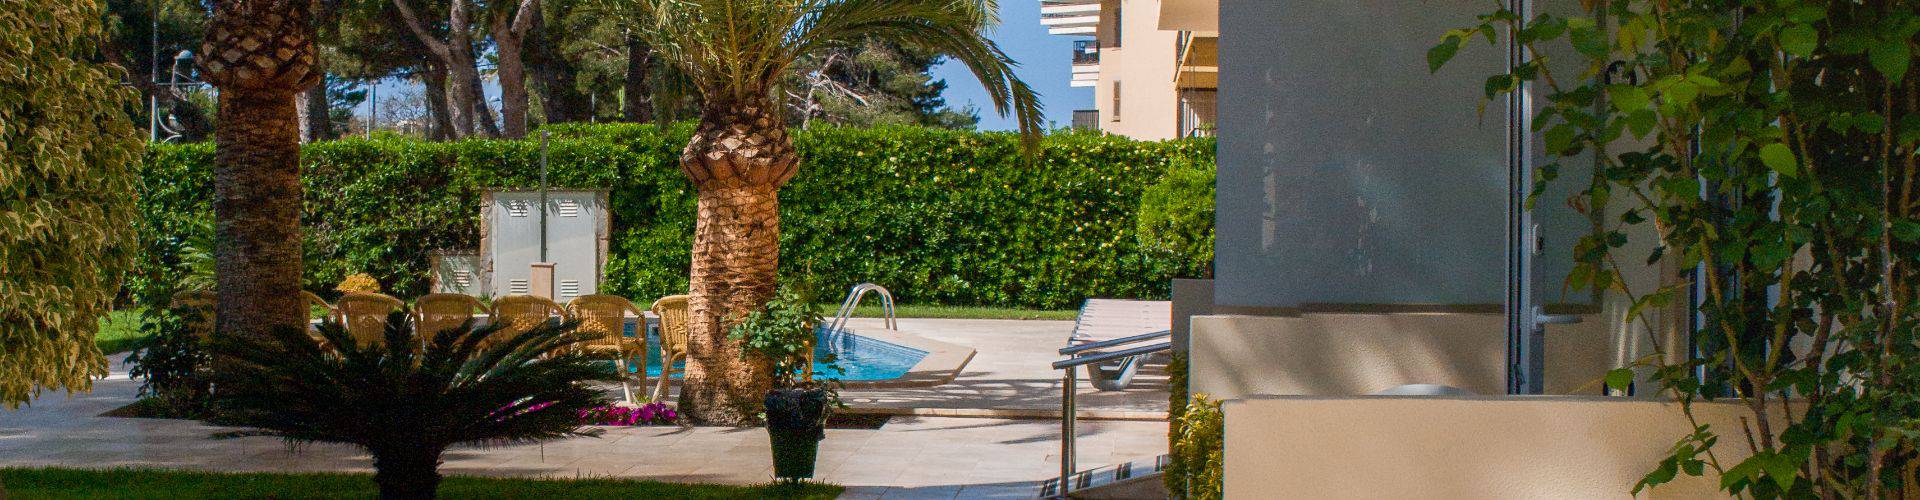 Cabot Hotels - Playa de Palma - 